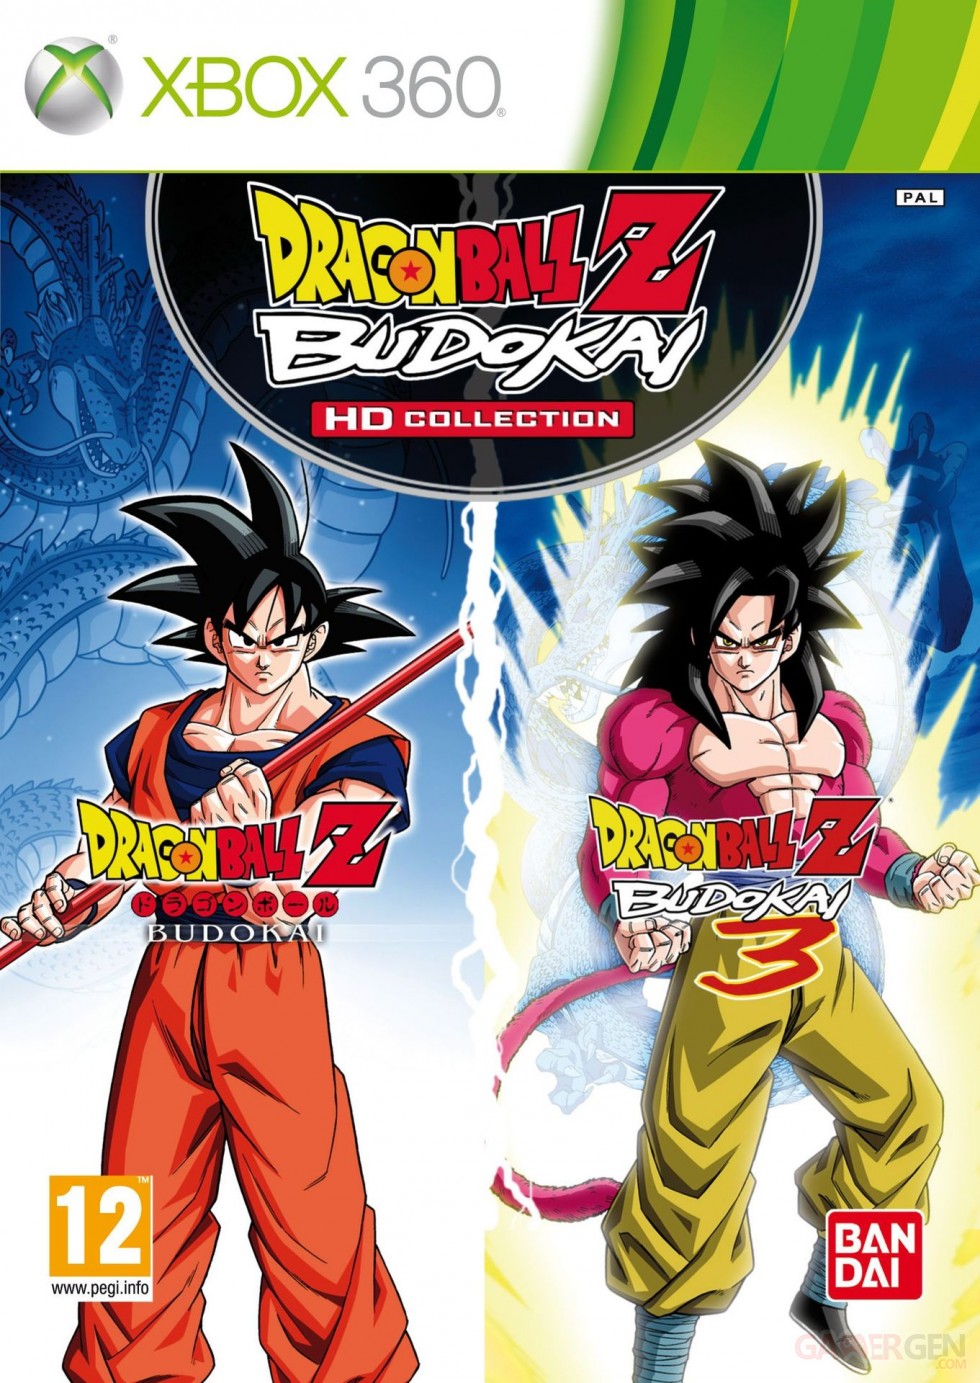 Jaquette-Cover-Dragon-Ball-Z-Budokai-HD-Collection-07-05-12